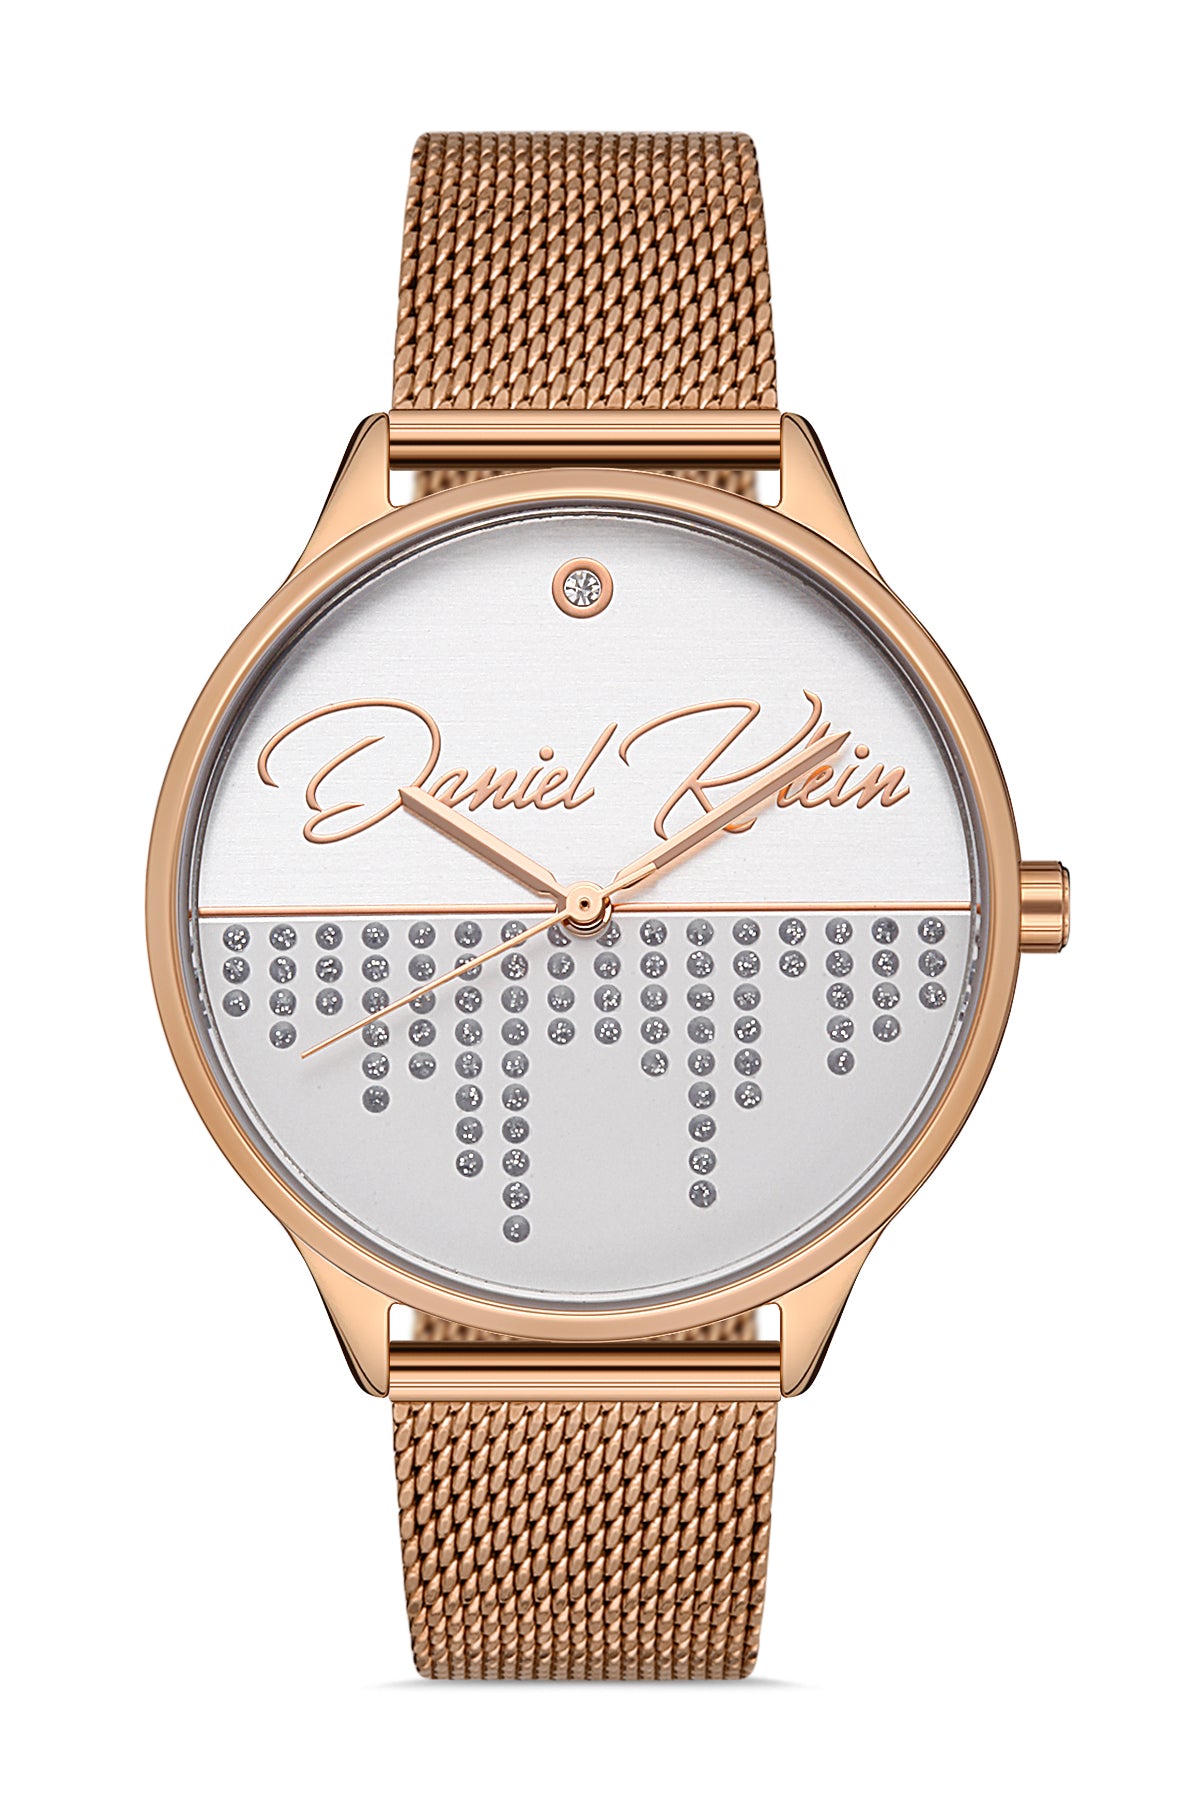 Online Western Watches | Buy Luxury | Perfumes | Watches Dubai UAE